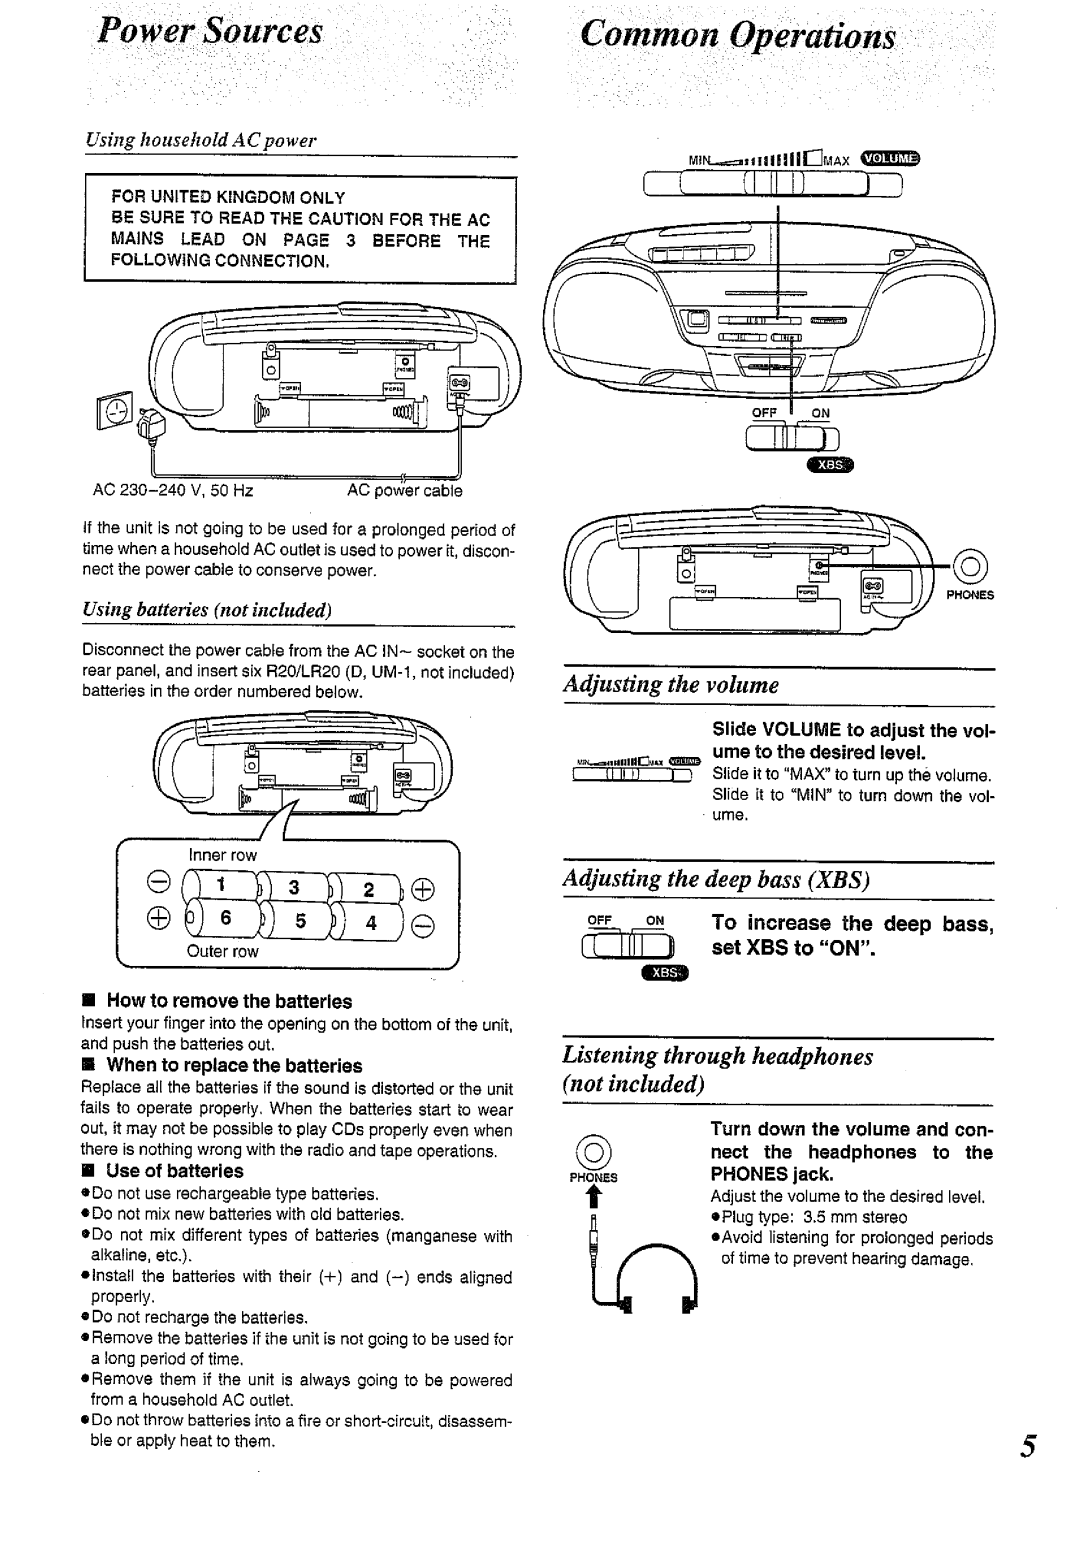 Panasonic RX-DS11 manual 